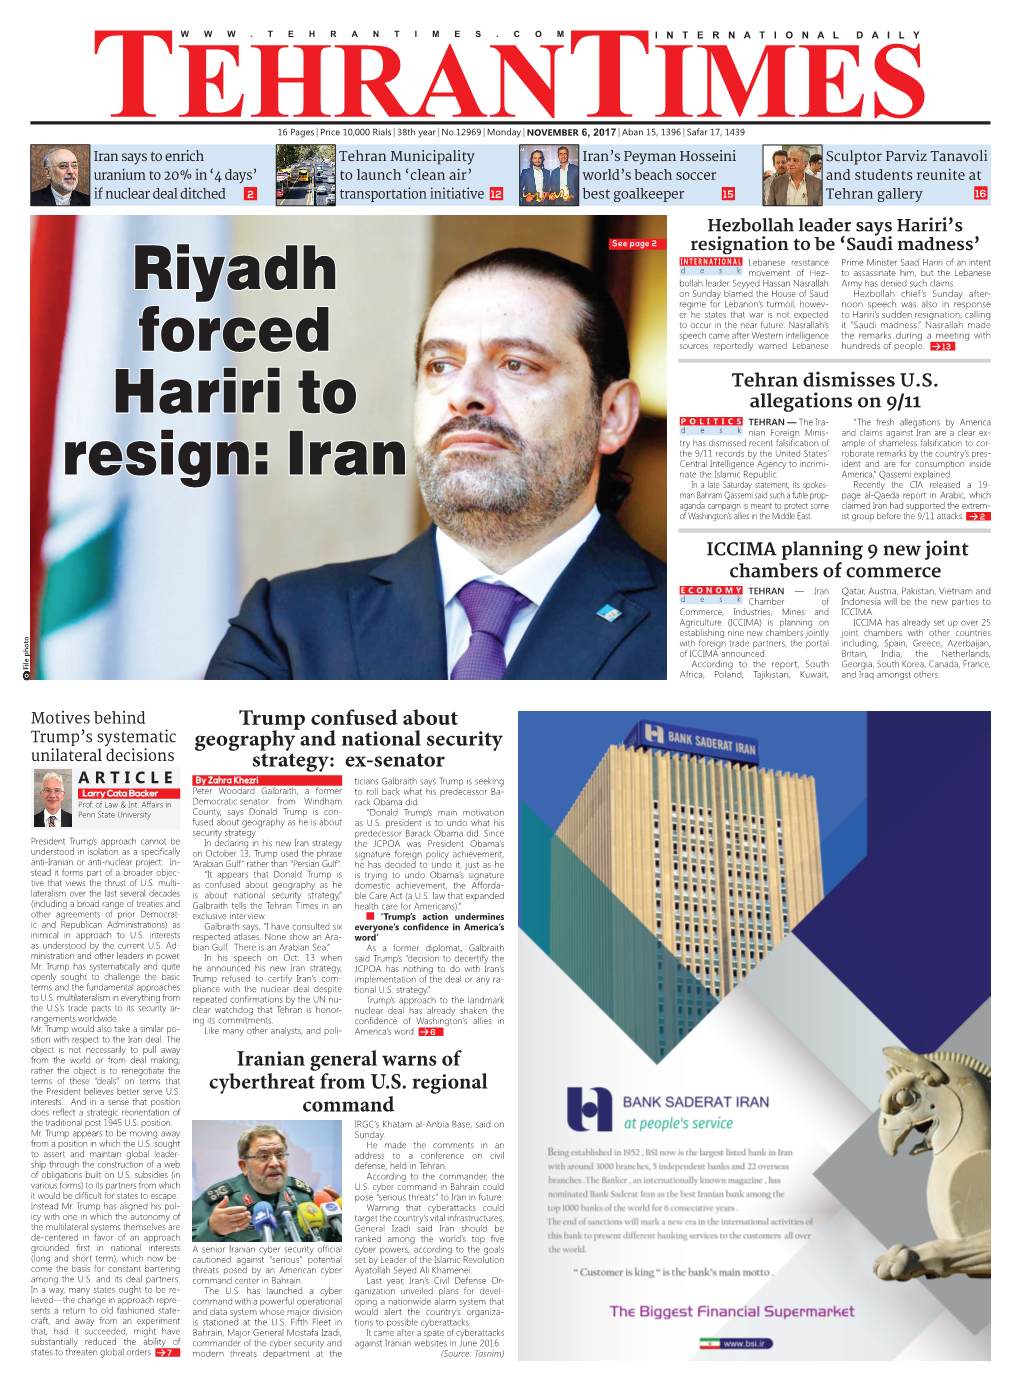 Riyadh Forced Hariri to Resign: Iran